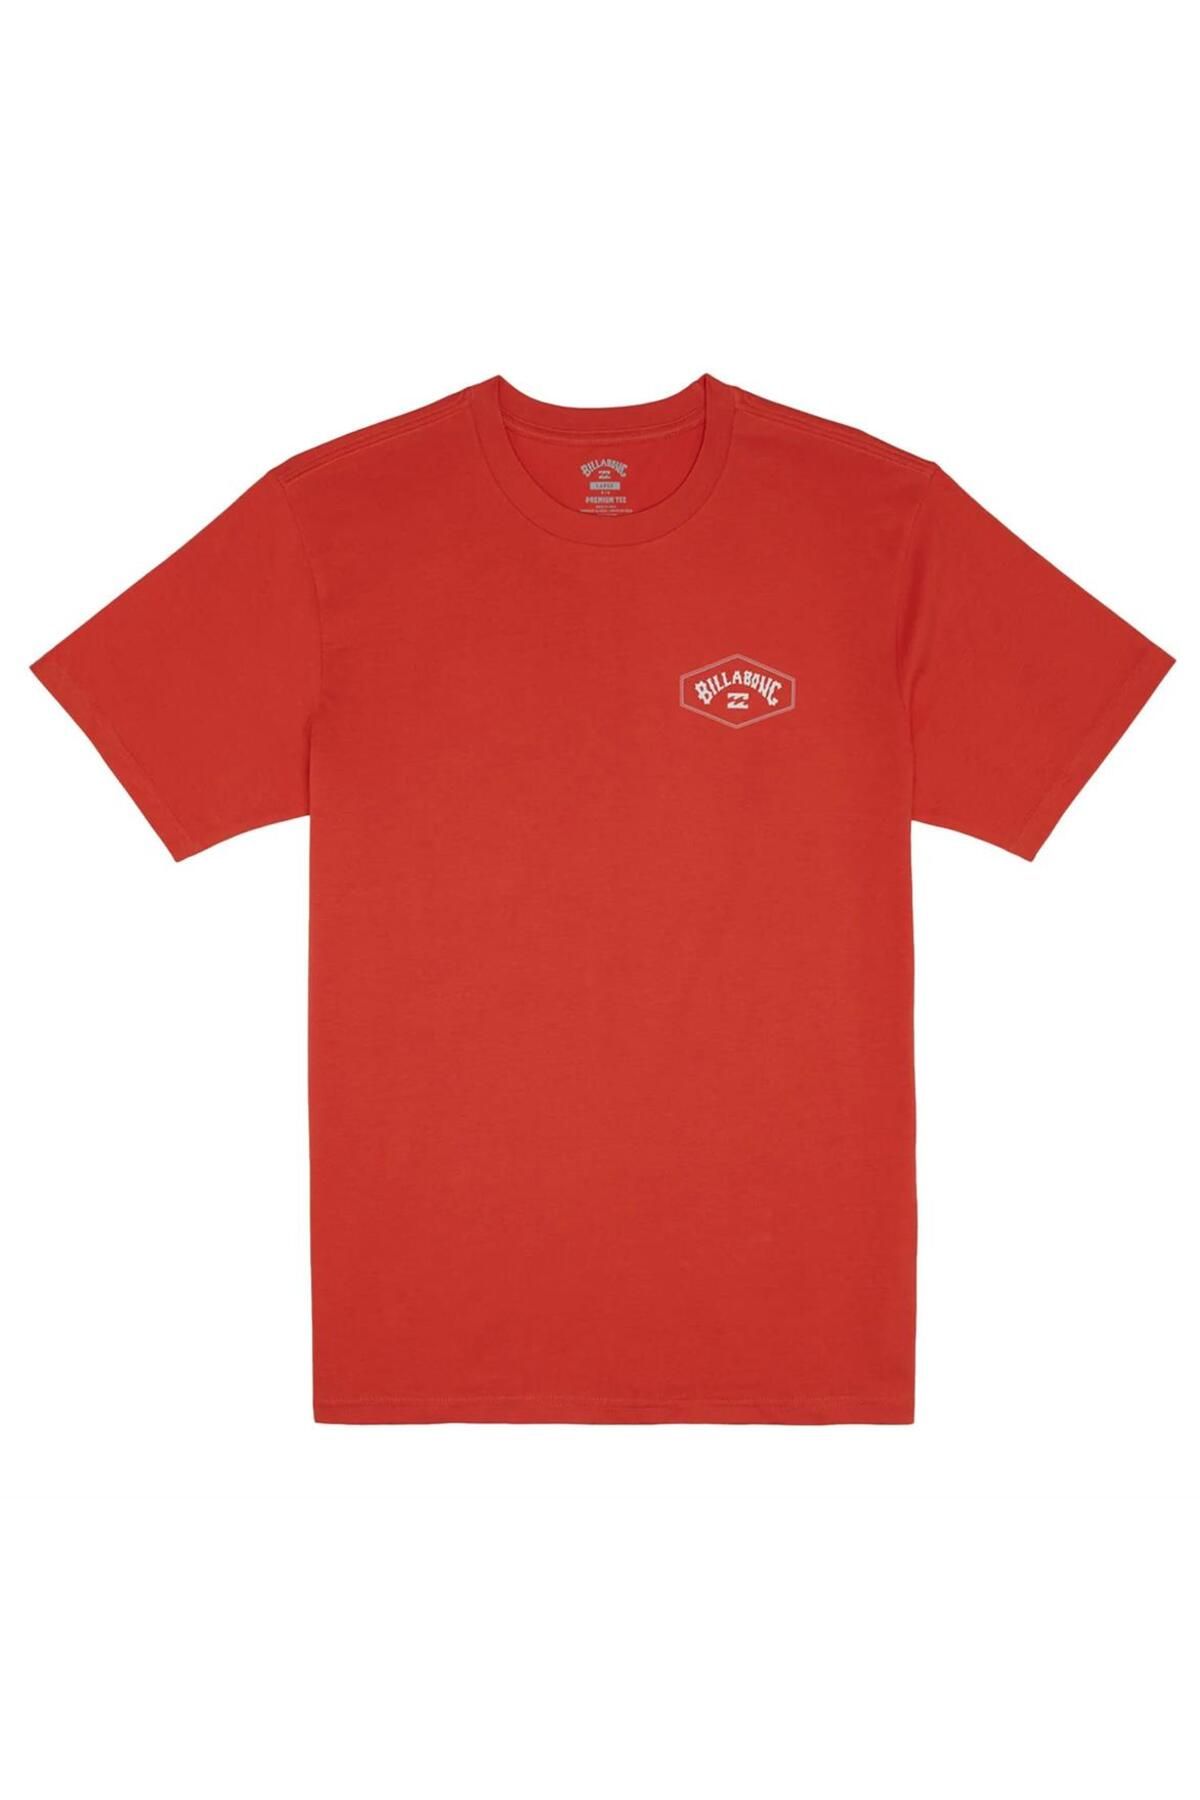 Billabong Billabong Exıt Arch Tees Kırmızı Erkek T-shirt